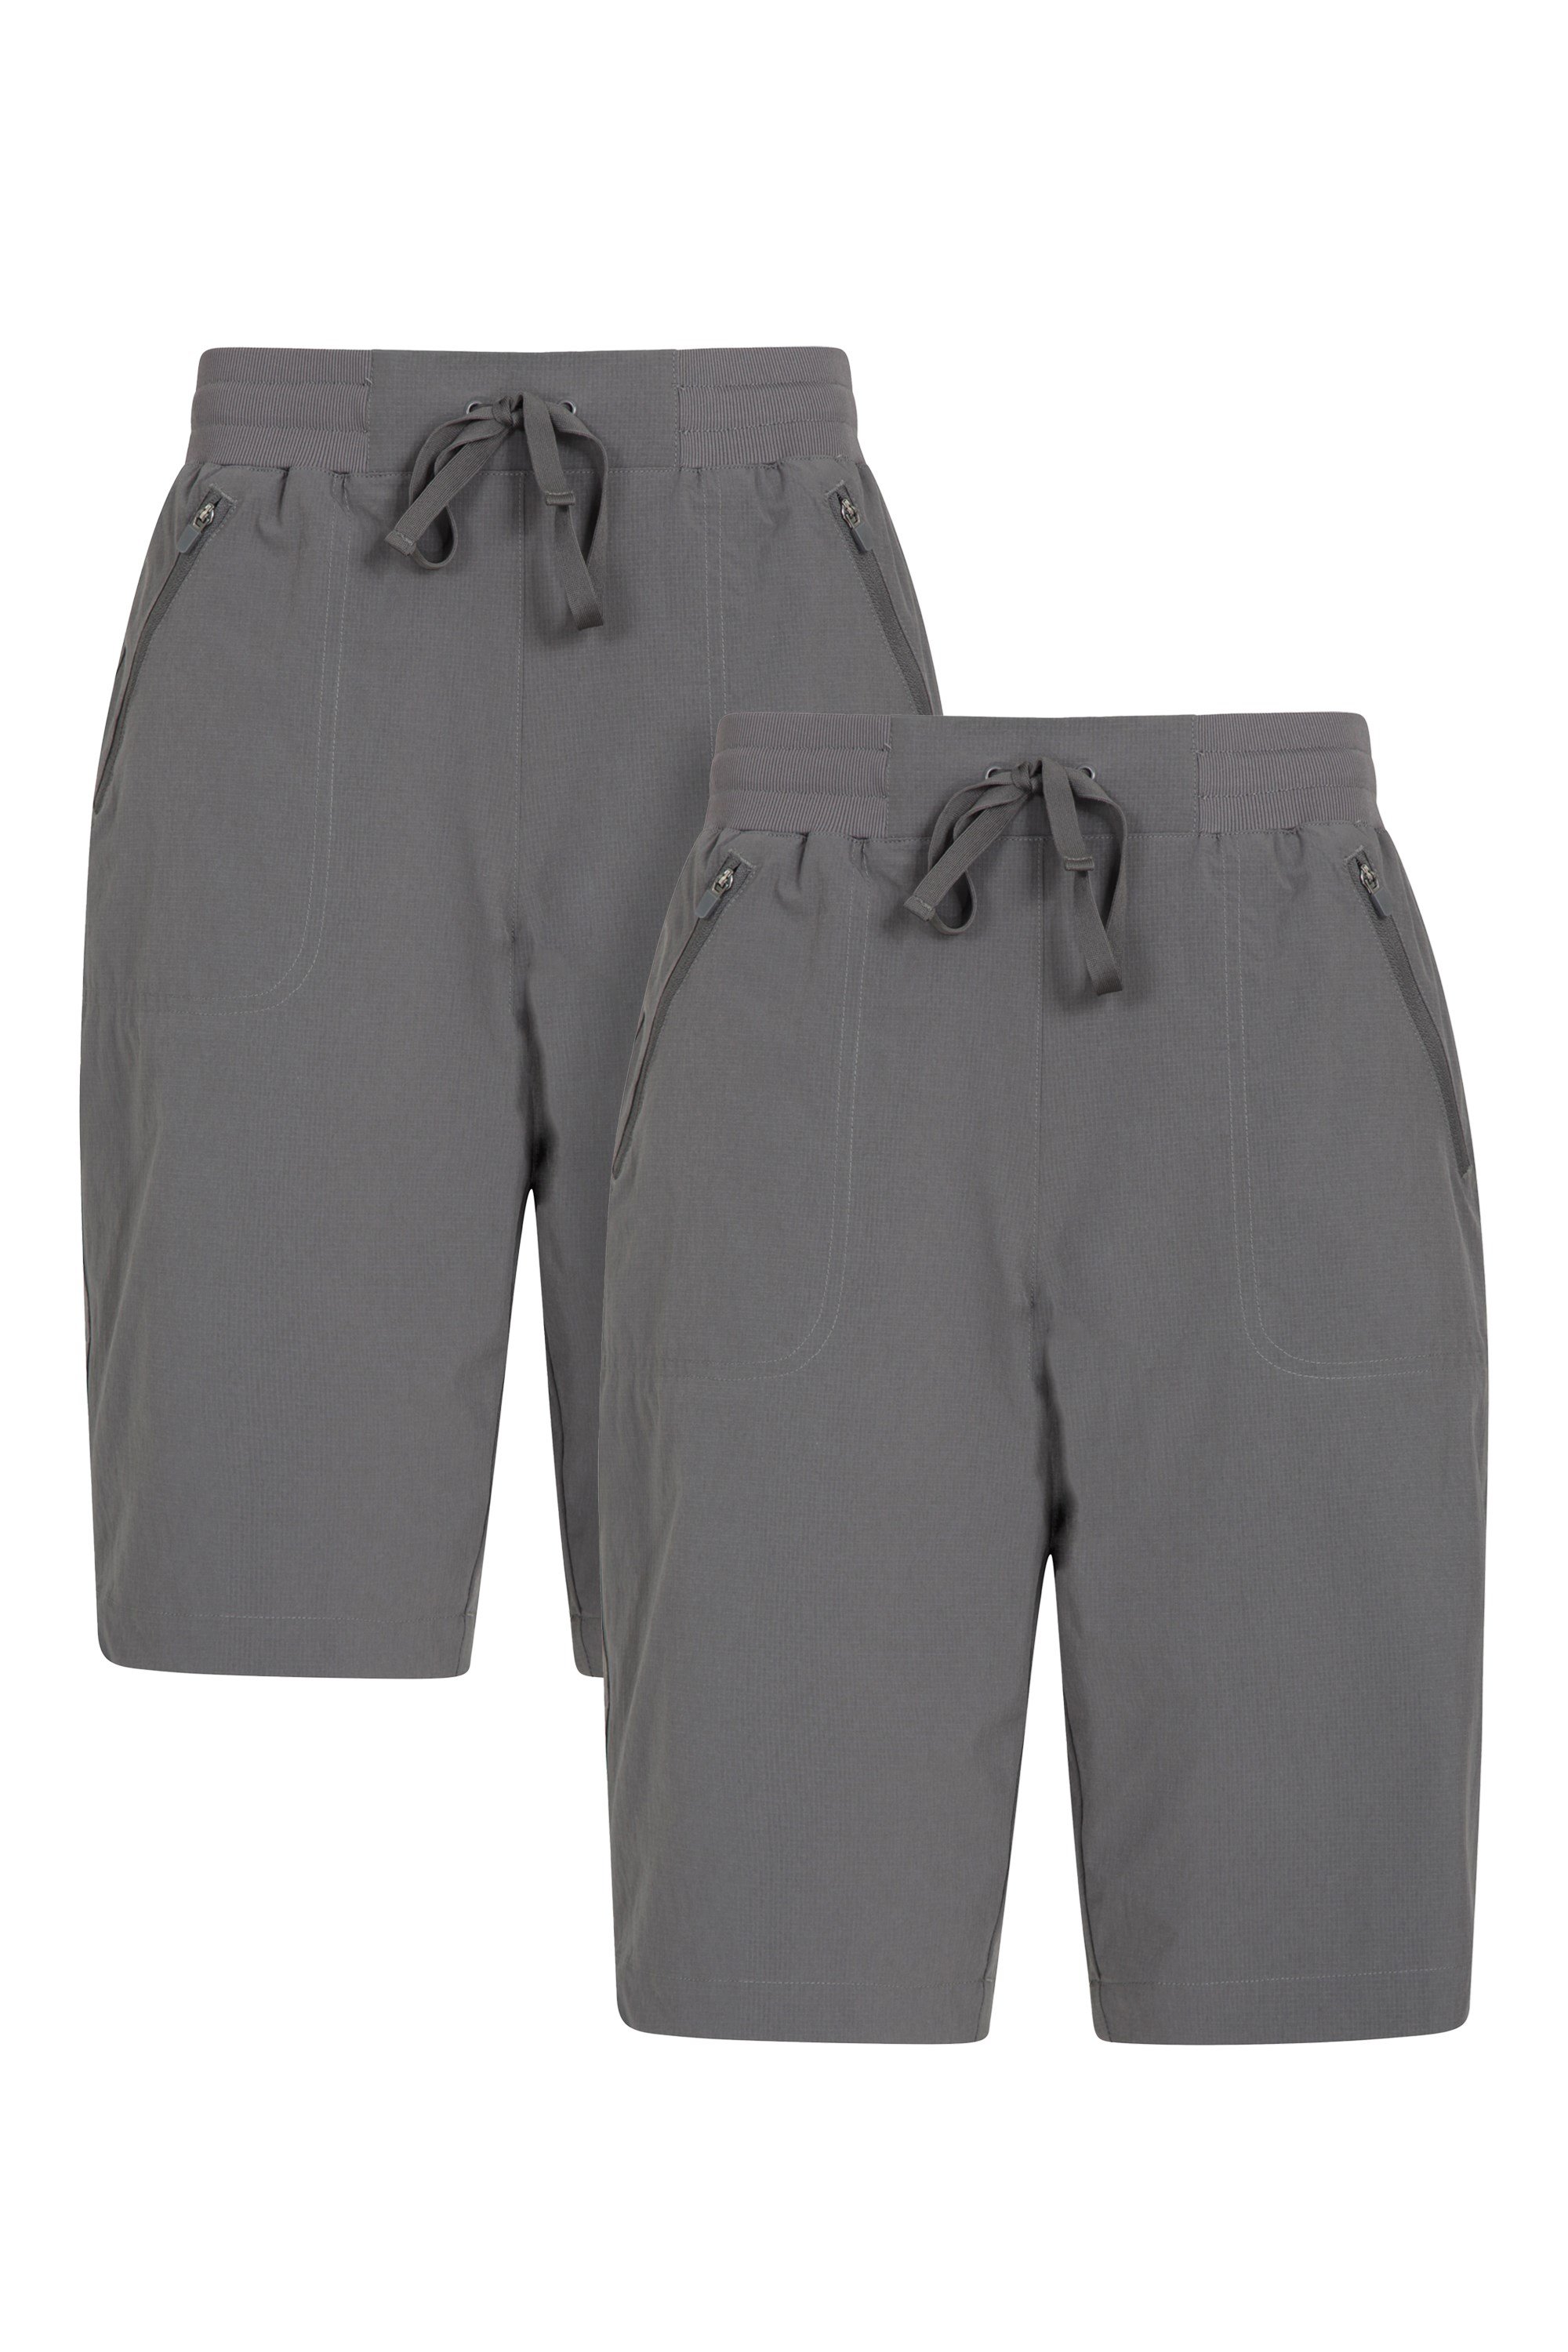 Explorer Womens Long Shorts 2-Pack - Grey